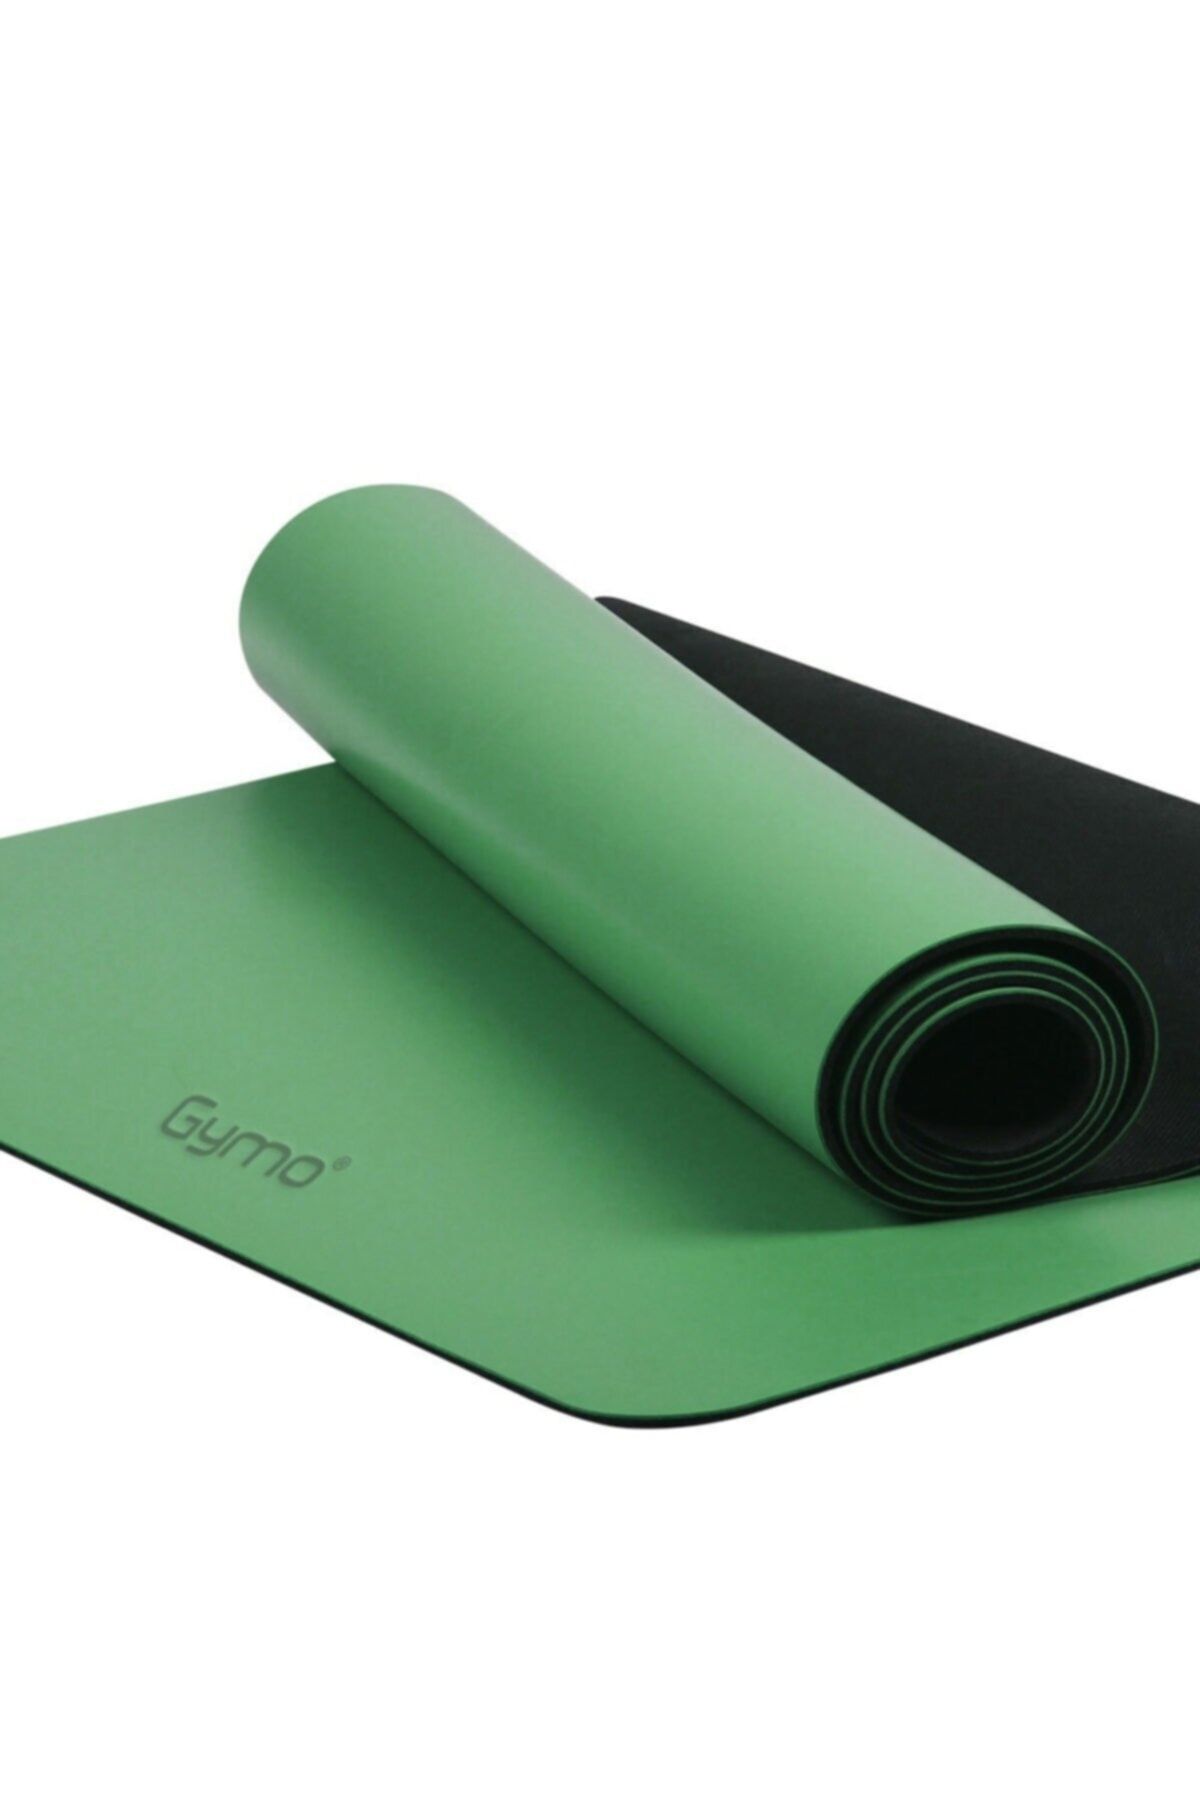 Gymo Pu Rubber 5mm Profesyonel Pilates Minderi Yoga Matı Yeşil Renk Nature